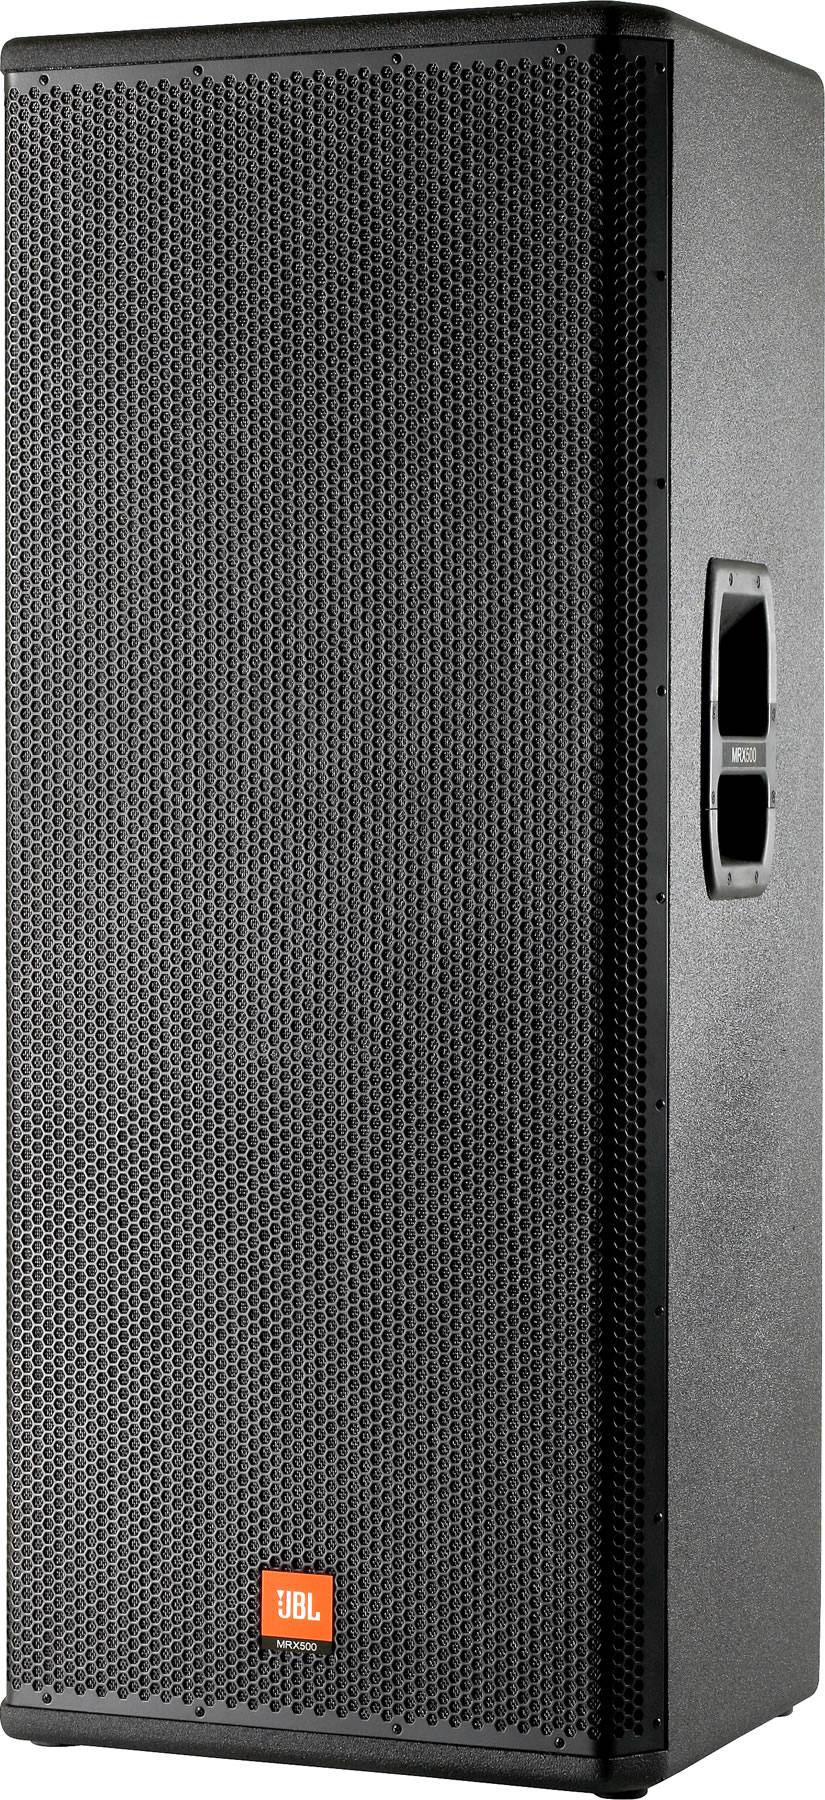 JBL MRX525 Speaker